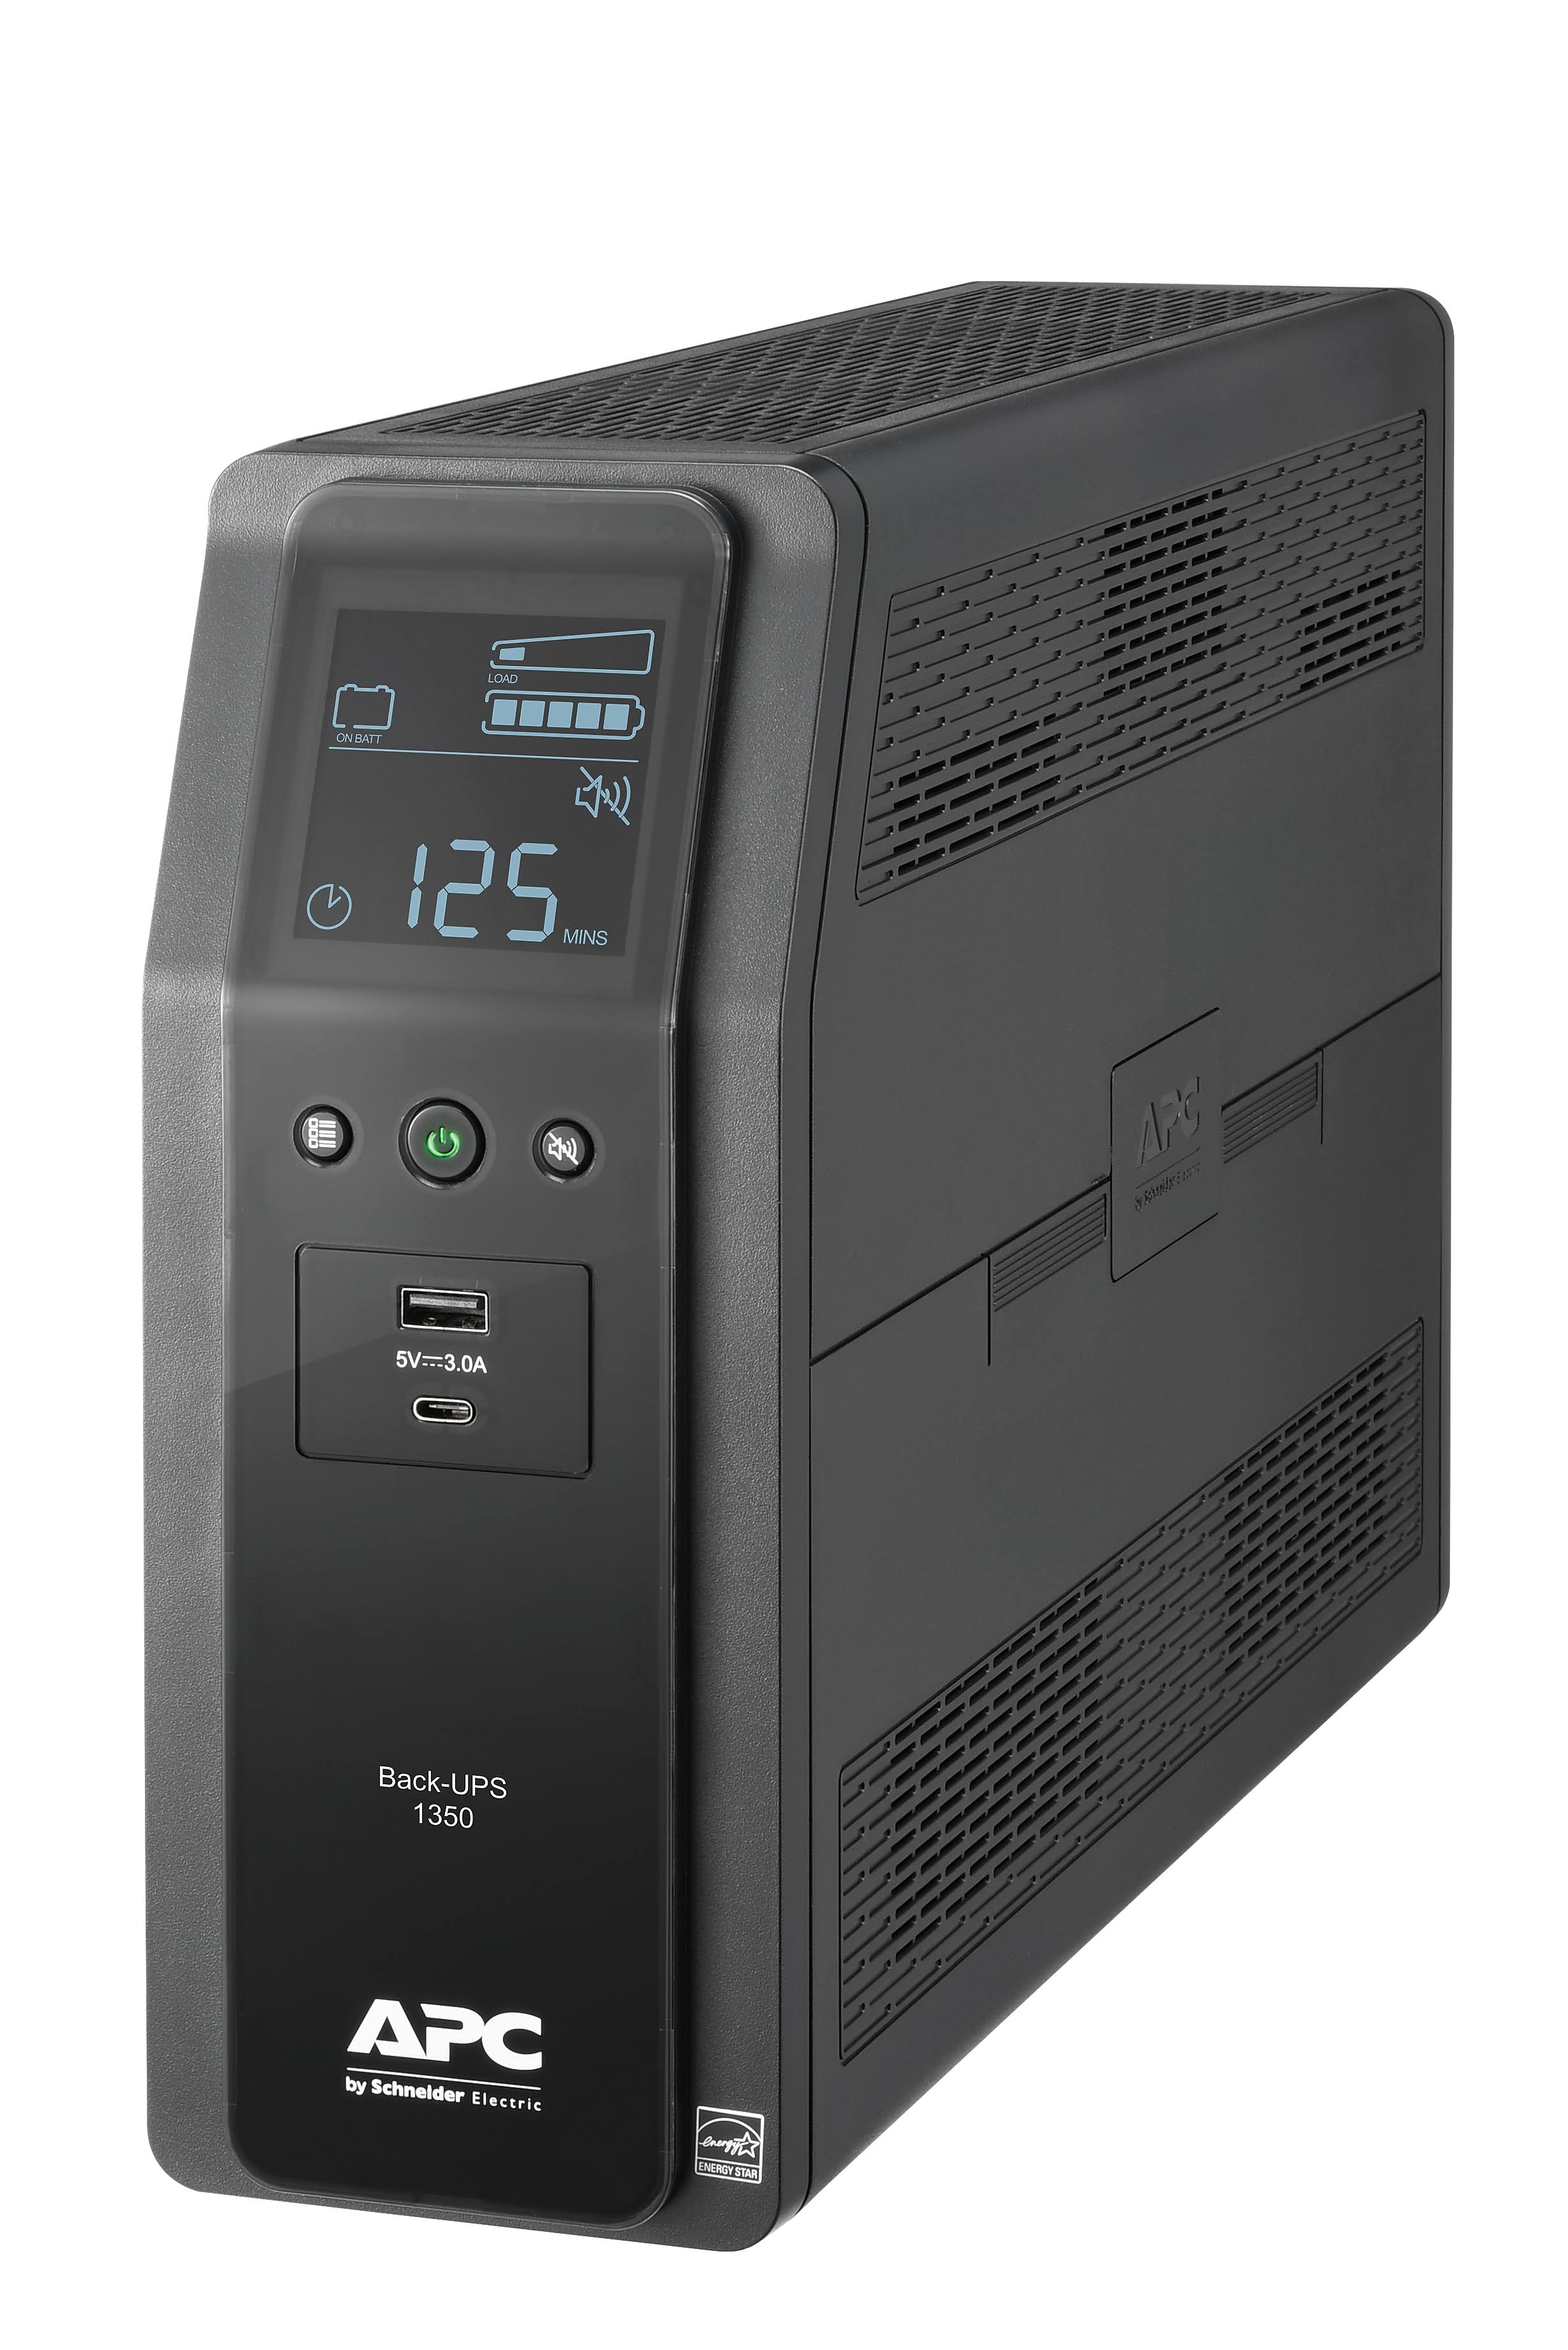 APC UPS Battery Backup Surge Protector, 1350VA Uninterruptible Power Supply, Back-UPS Pro (BN1350M2) $124.88